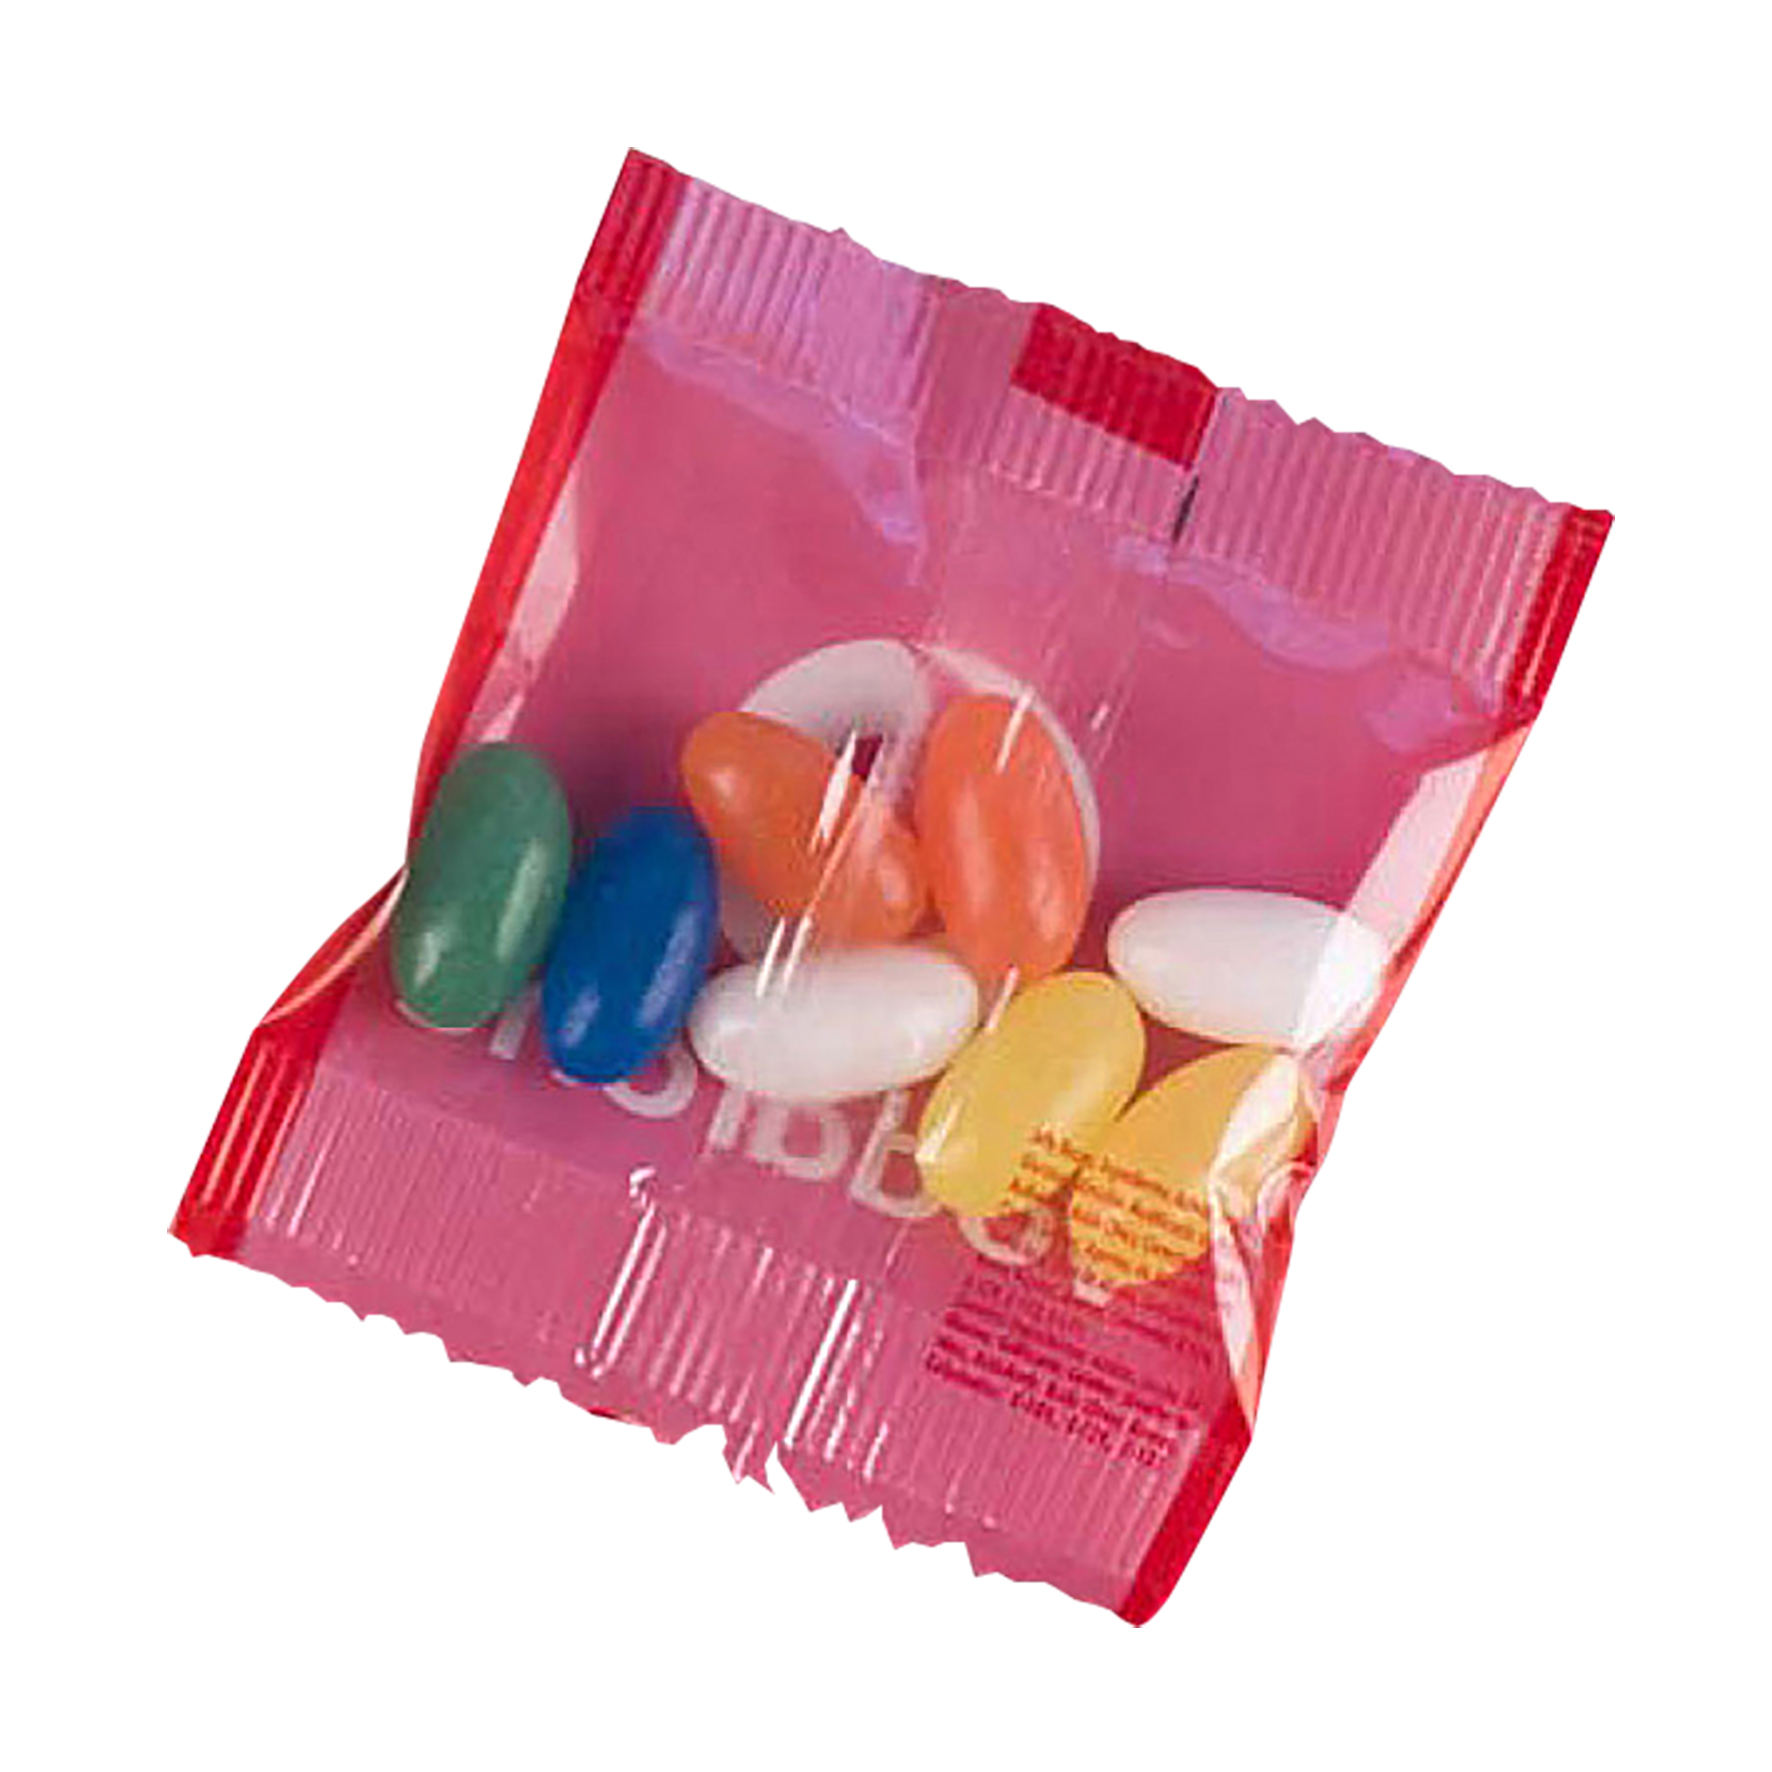 c 0070 00 2 - Jelly bean bag (7.5g)